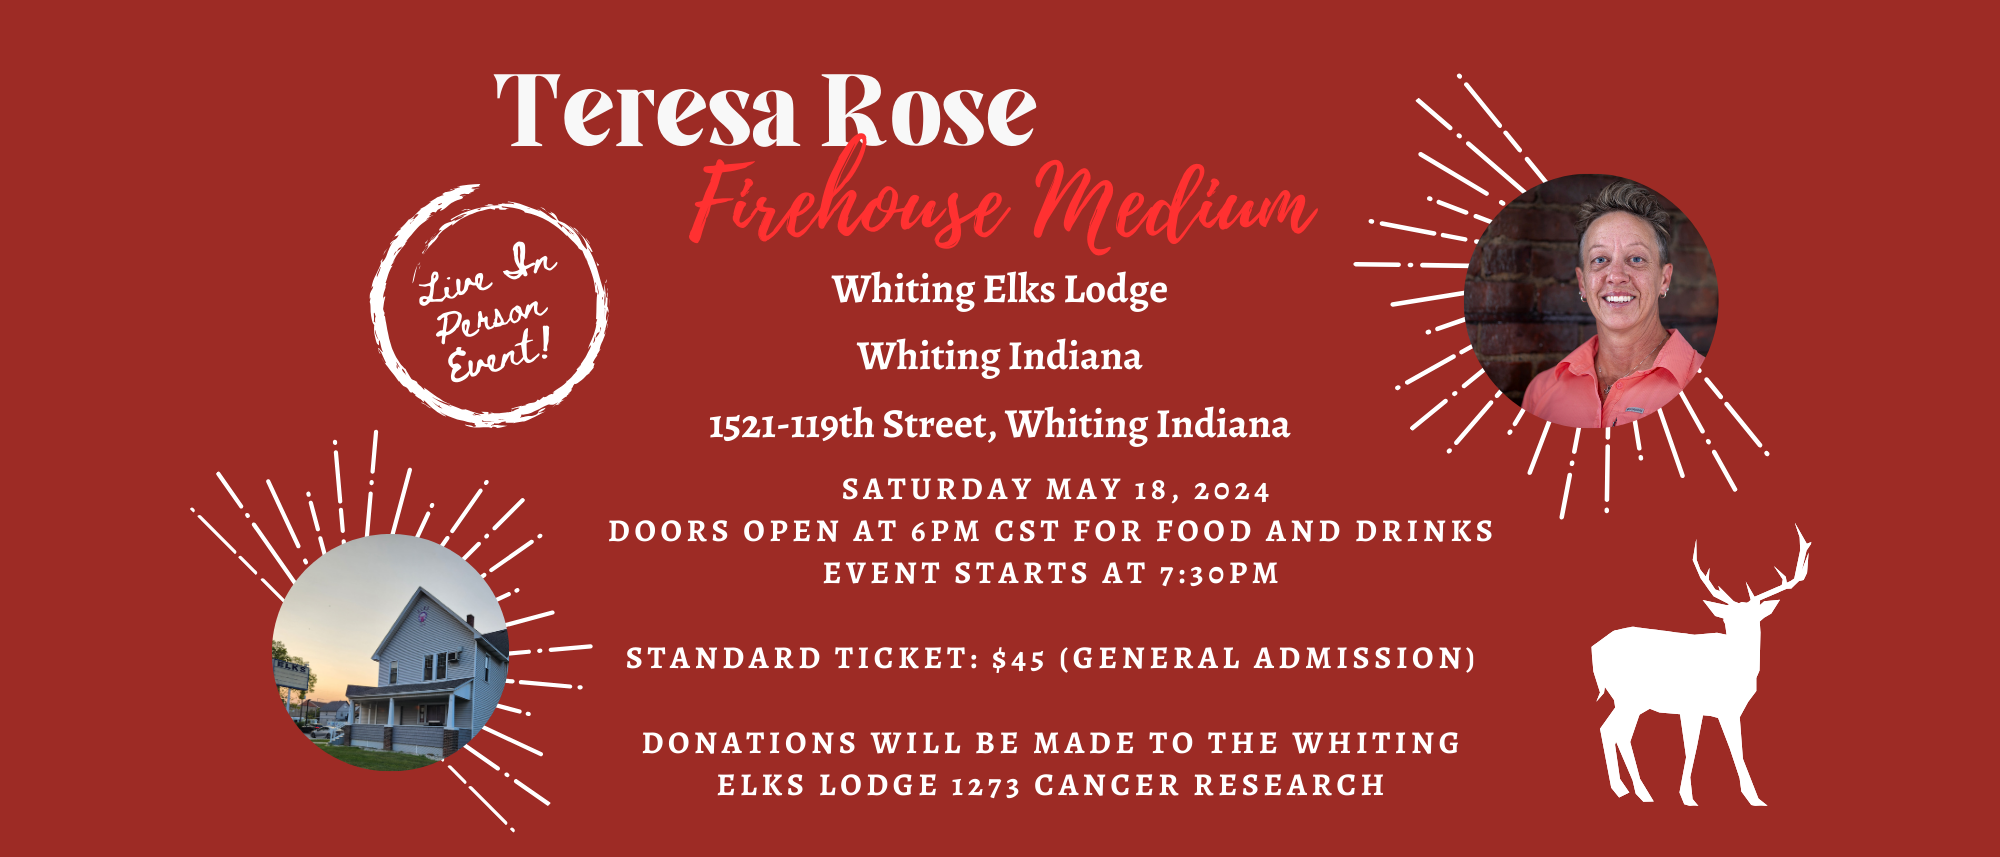 Teresa Rose Firehouse Medium at Whiting Elks Lodge